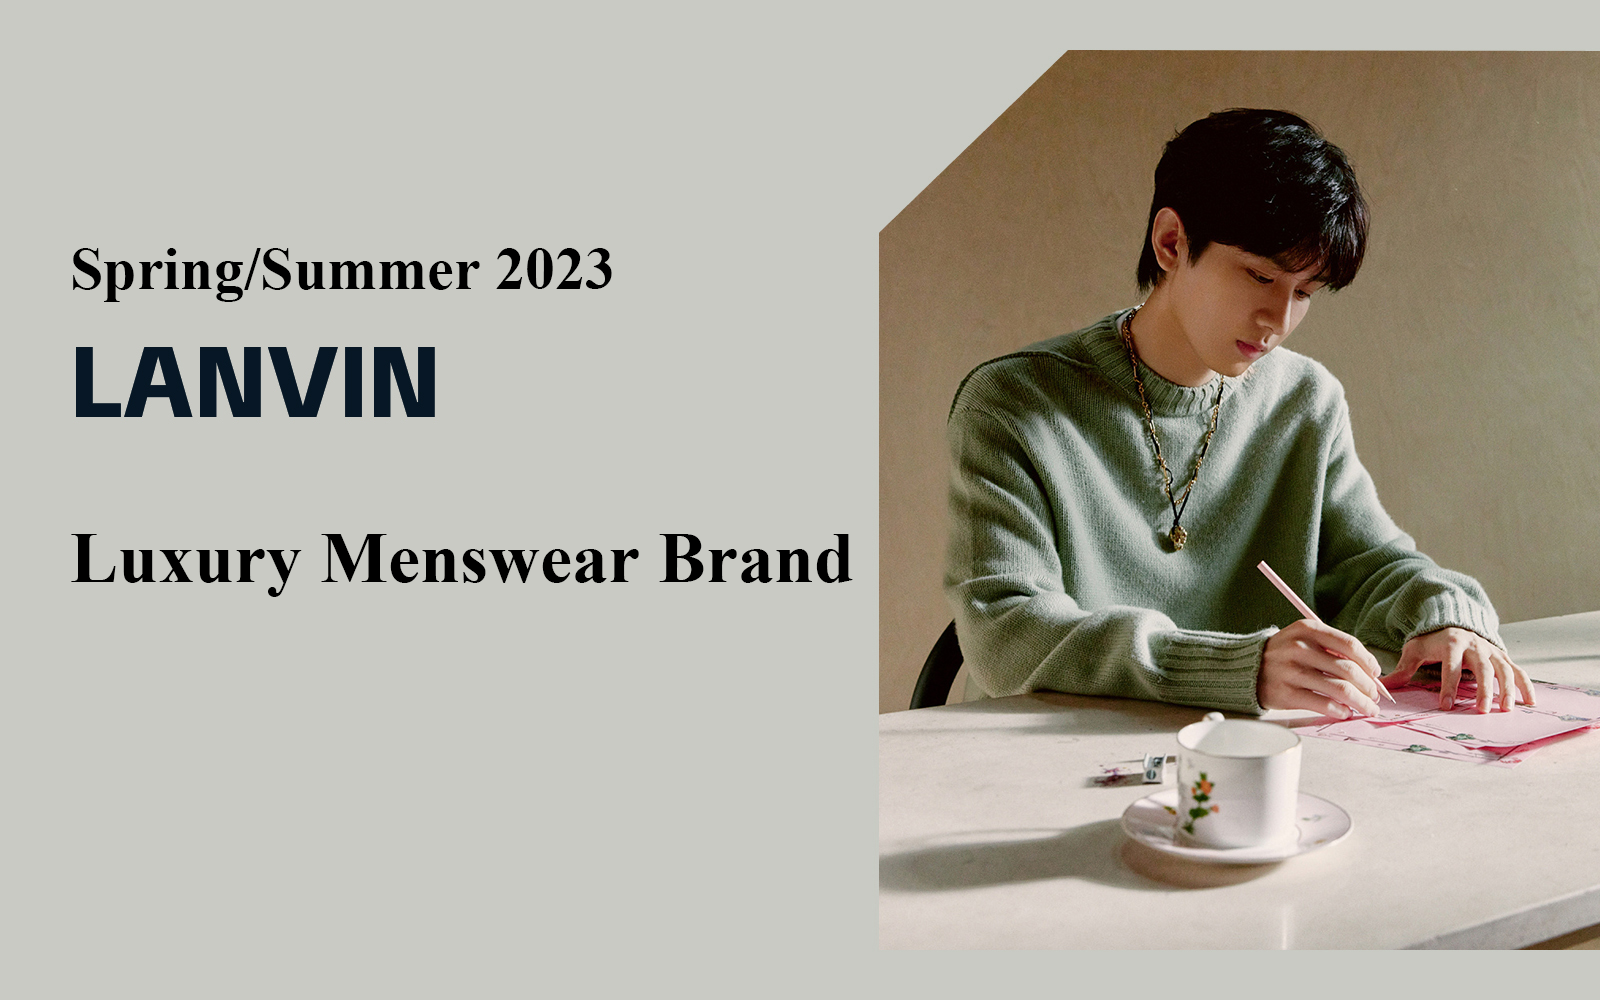 The Analysis of Lanvin The Luxury Menswear Brand